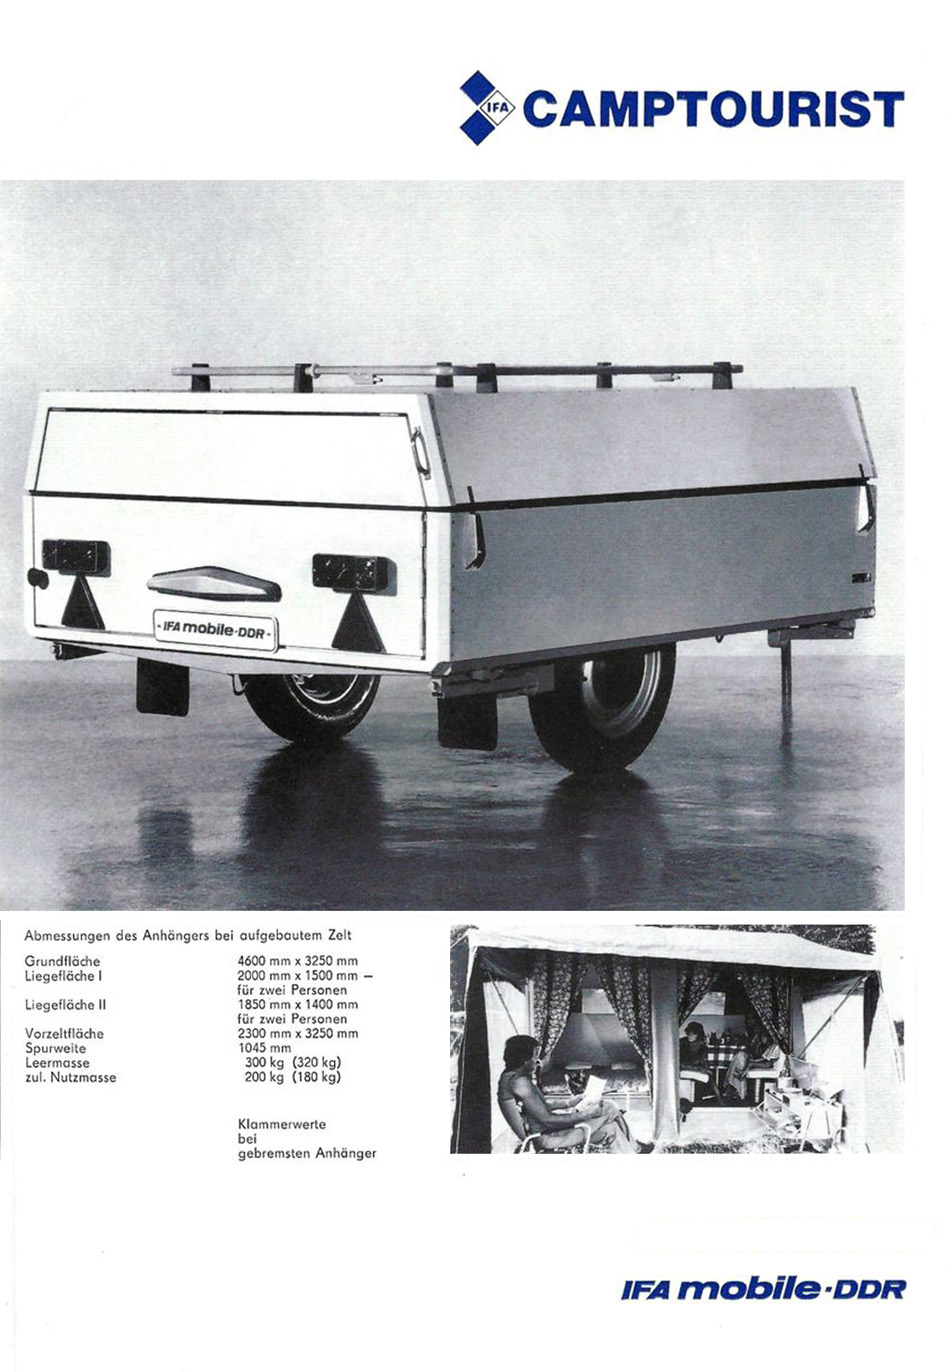 1979 - Trabant P 601 und Camptourist - Seite 4